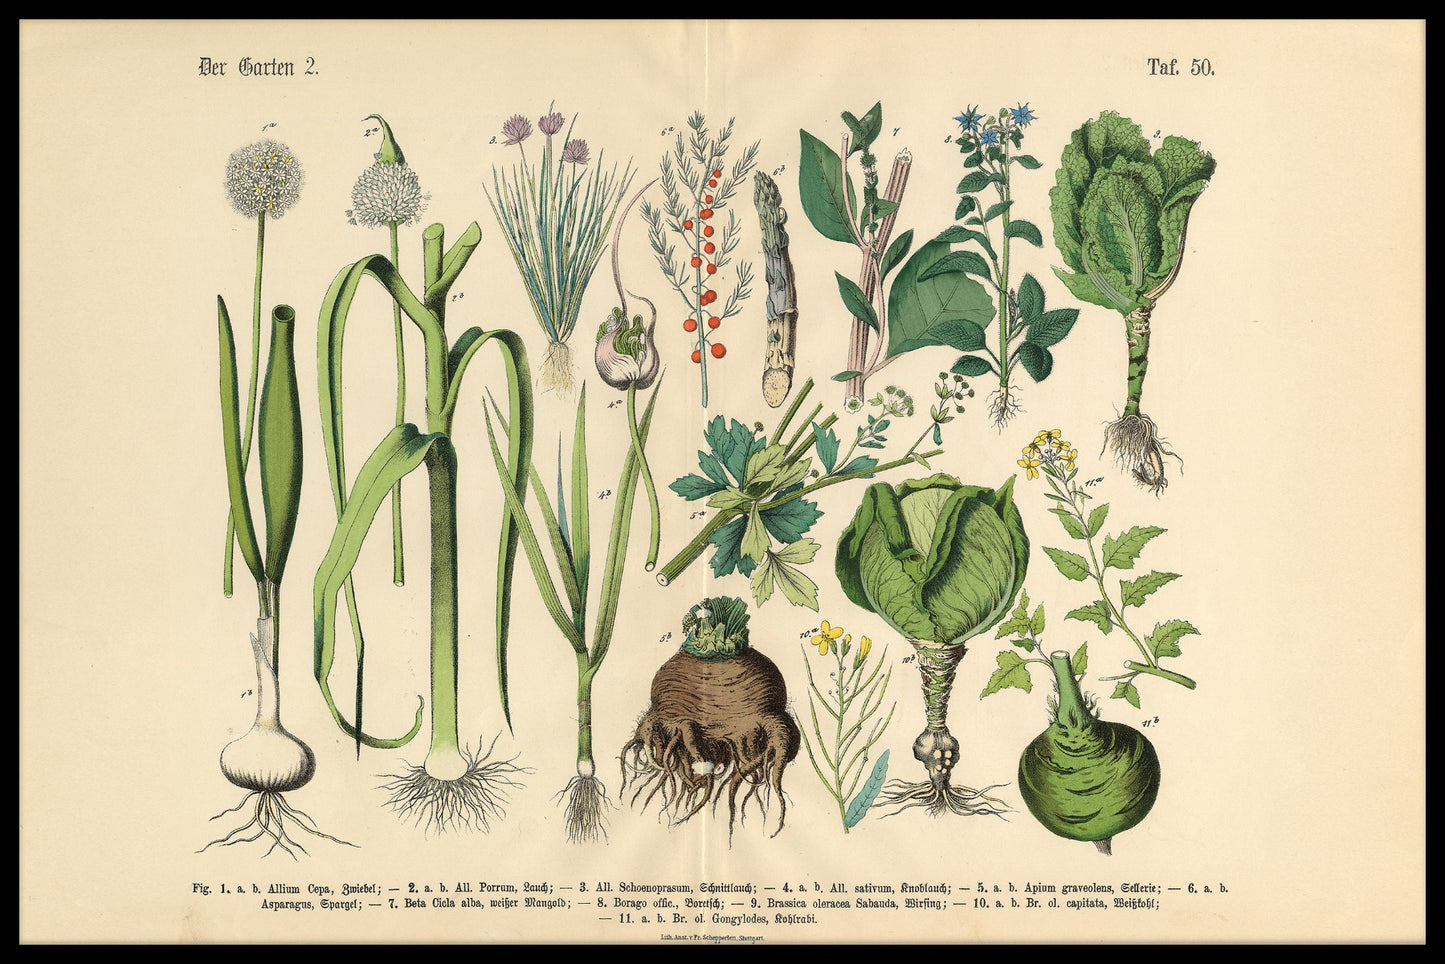  Victoriansk botanisk illustrationsplakat